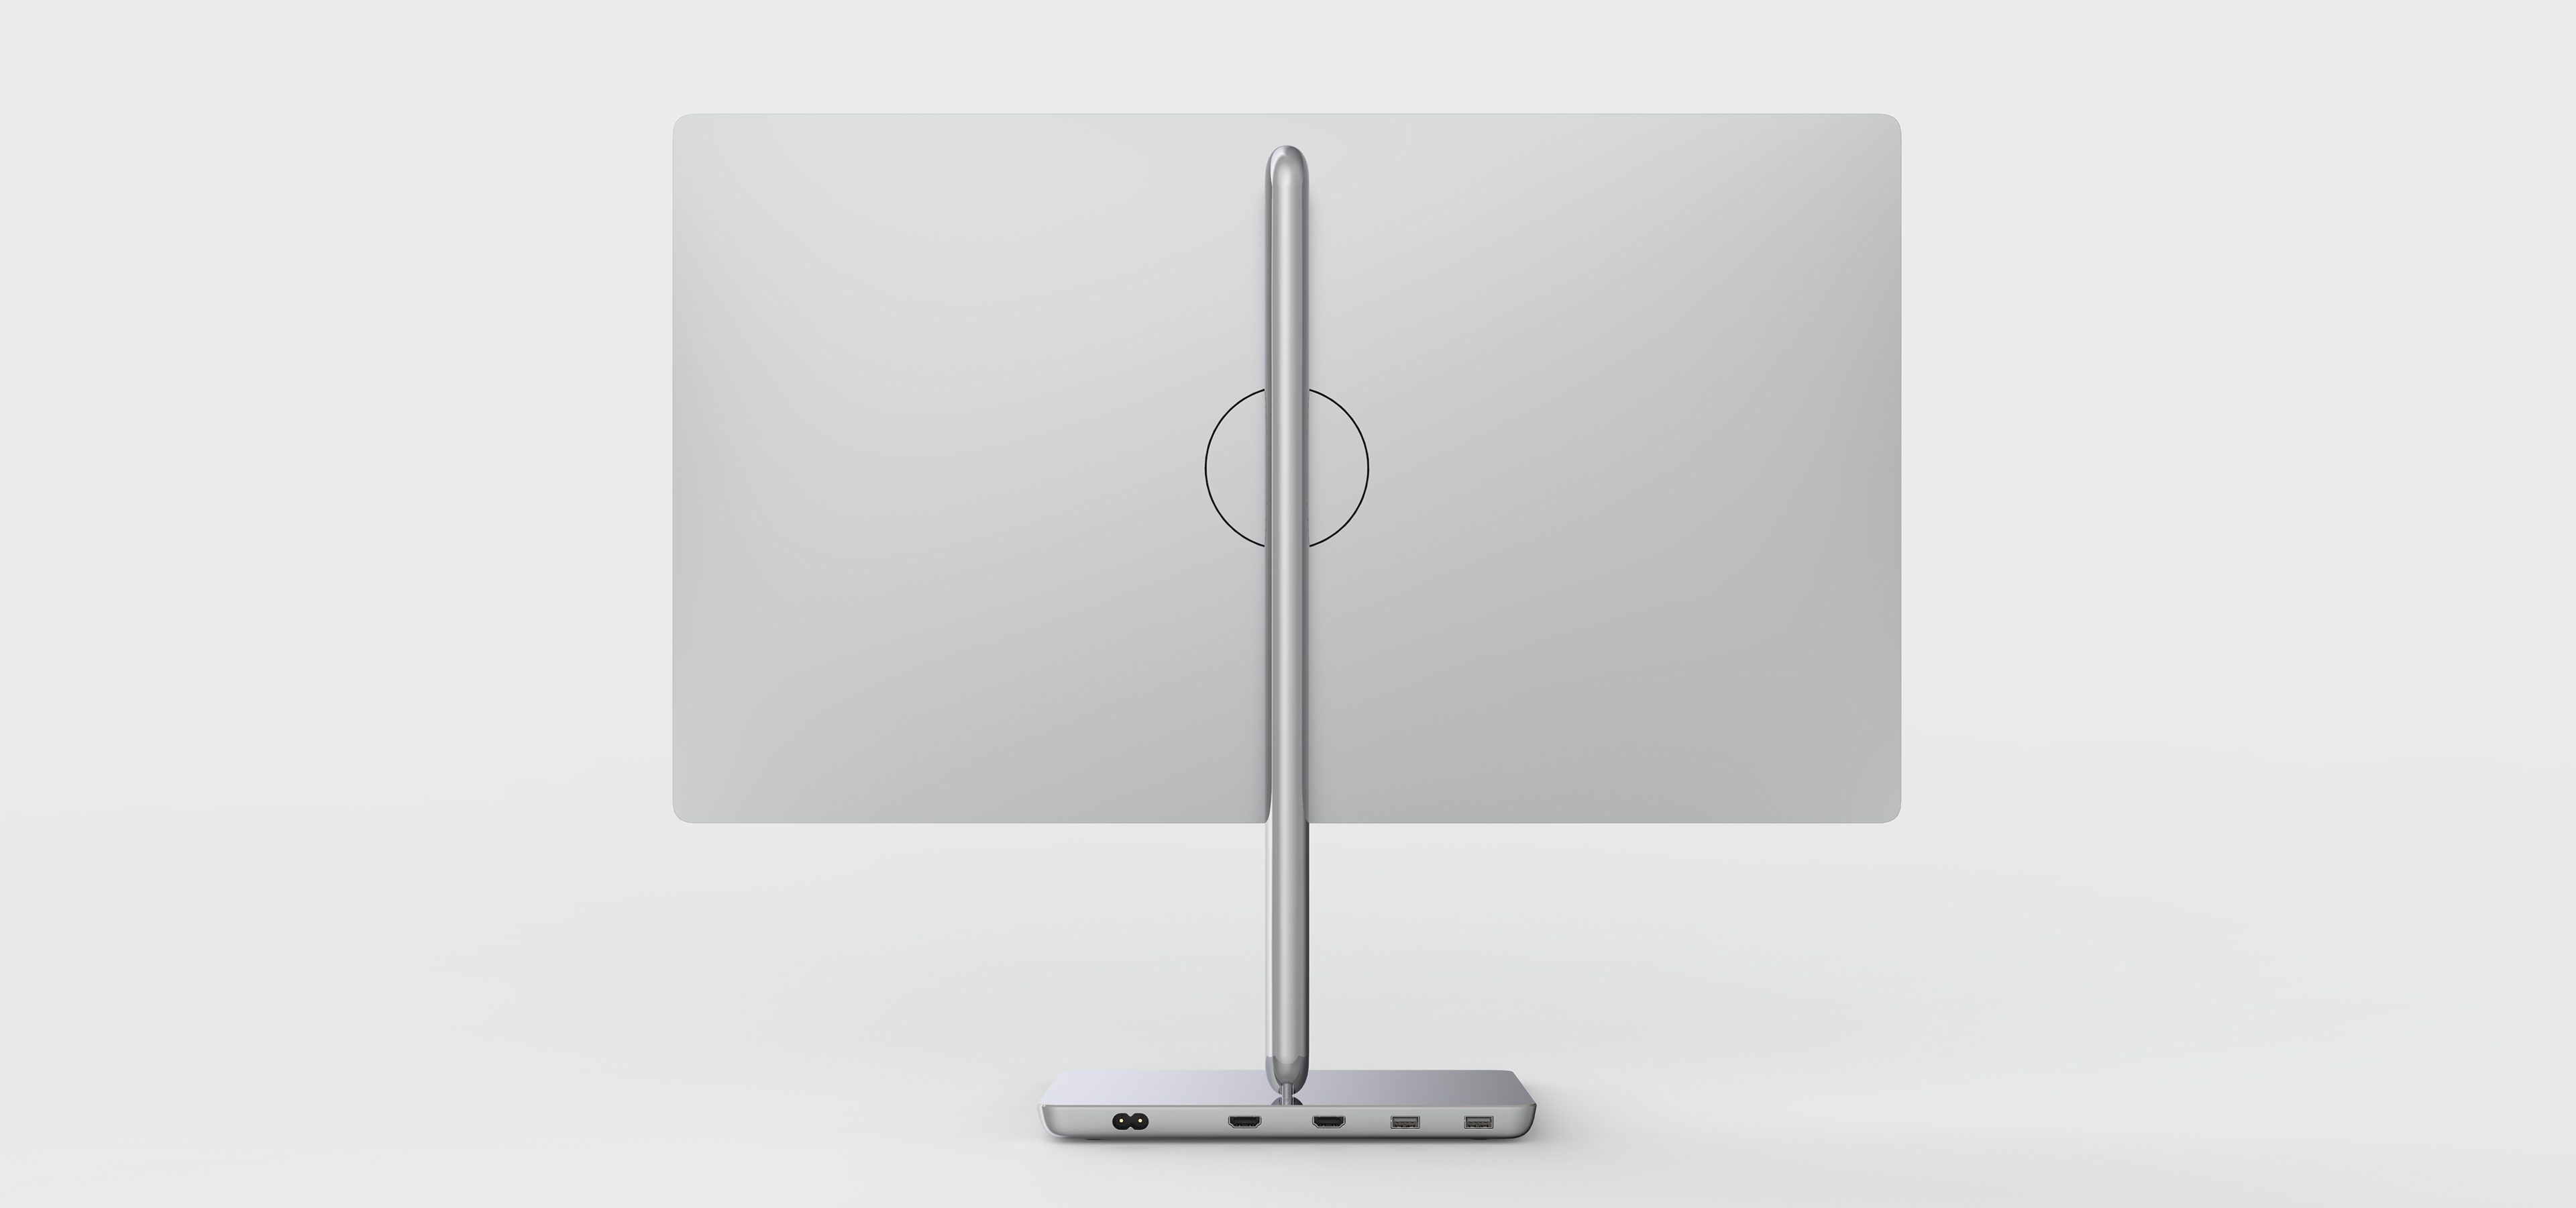 The rear design of balance monitor by Rodd Design